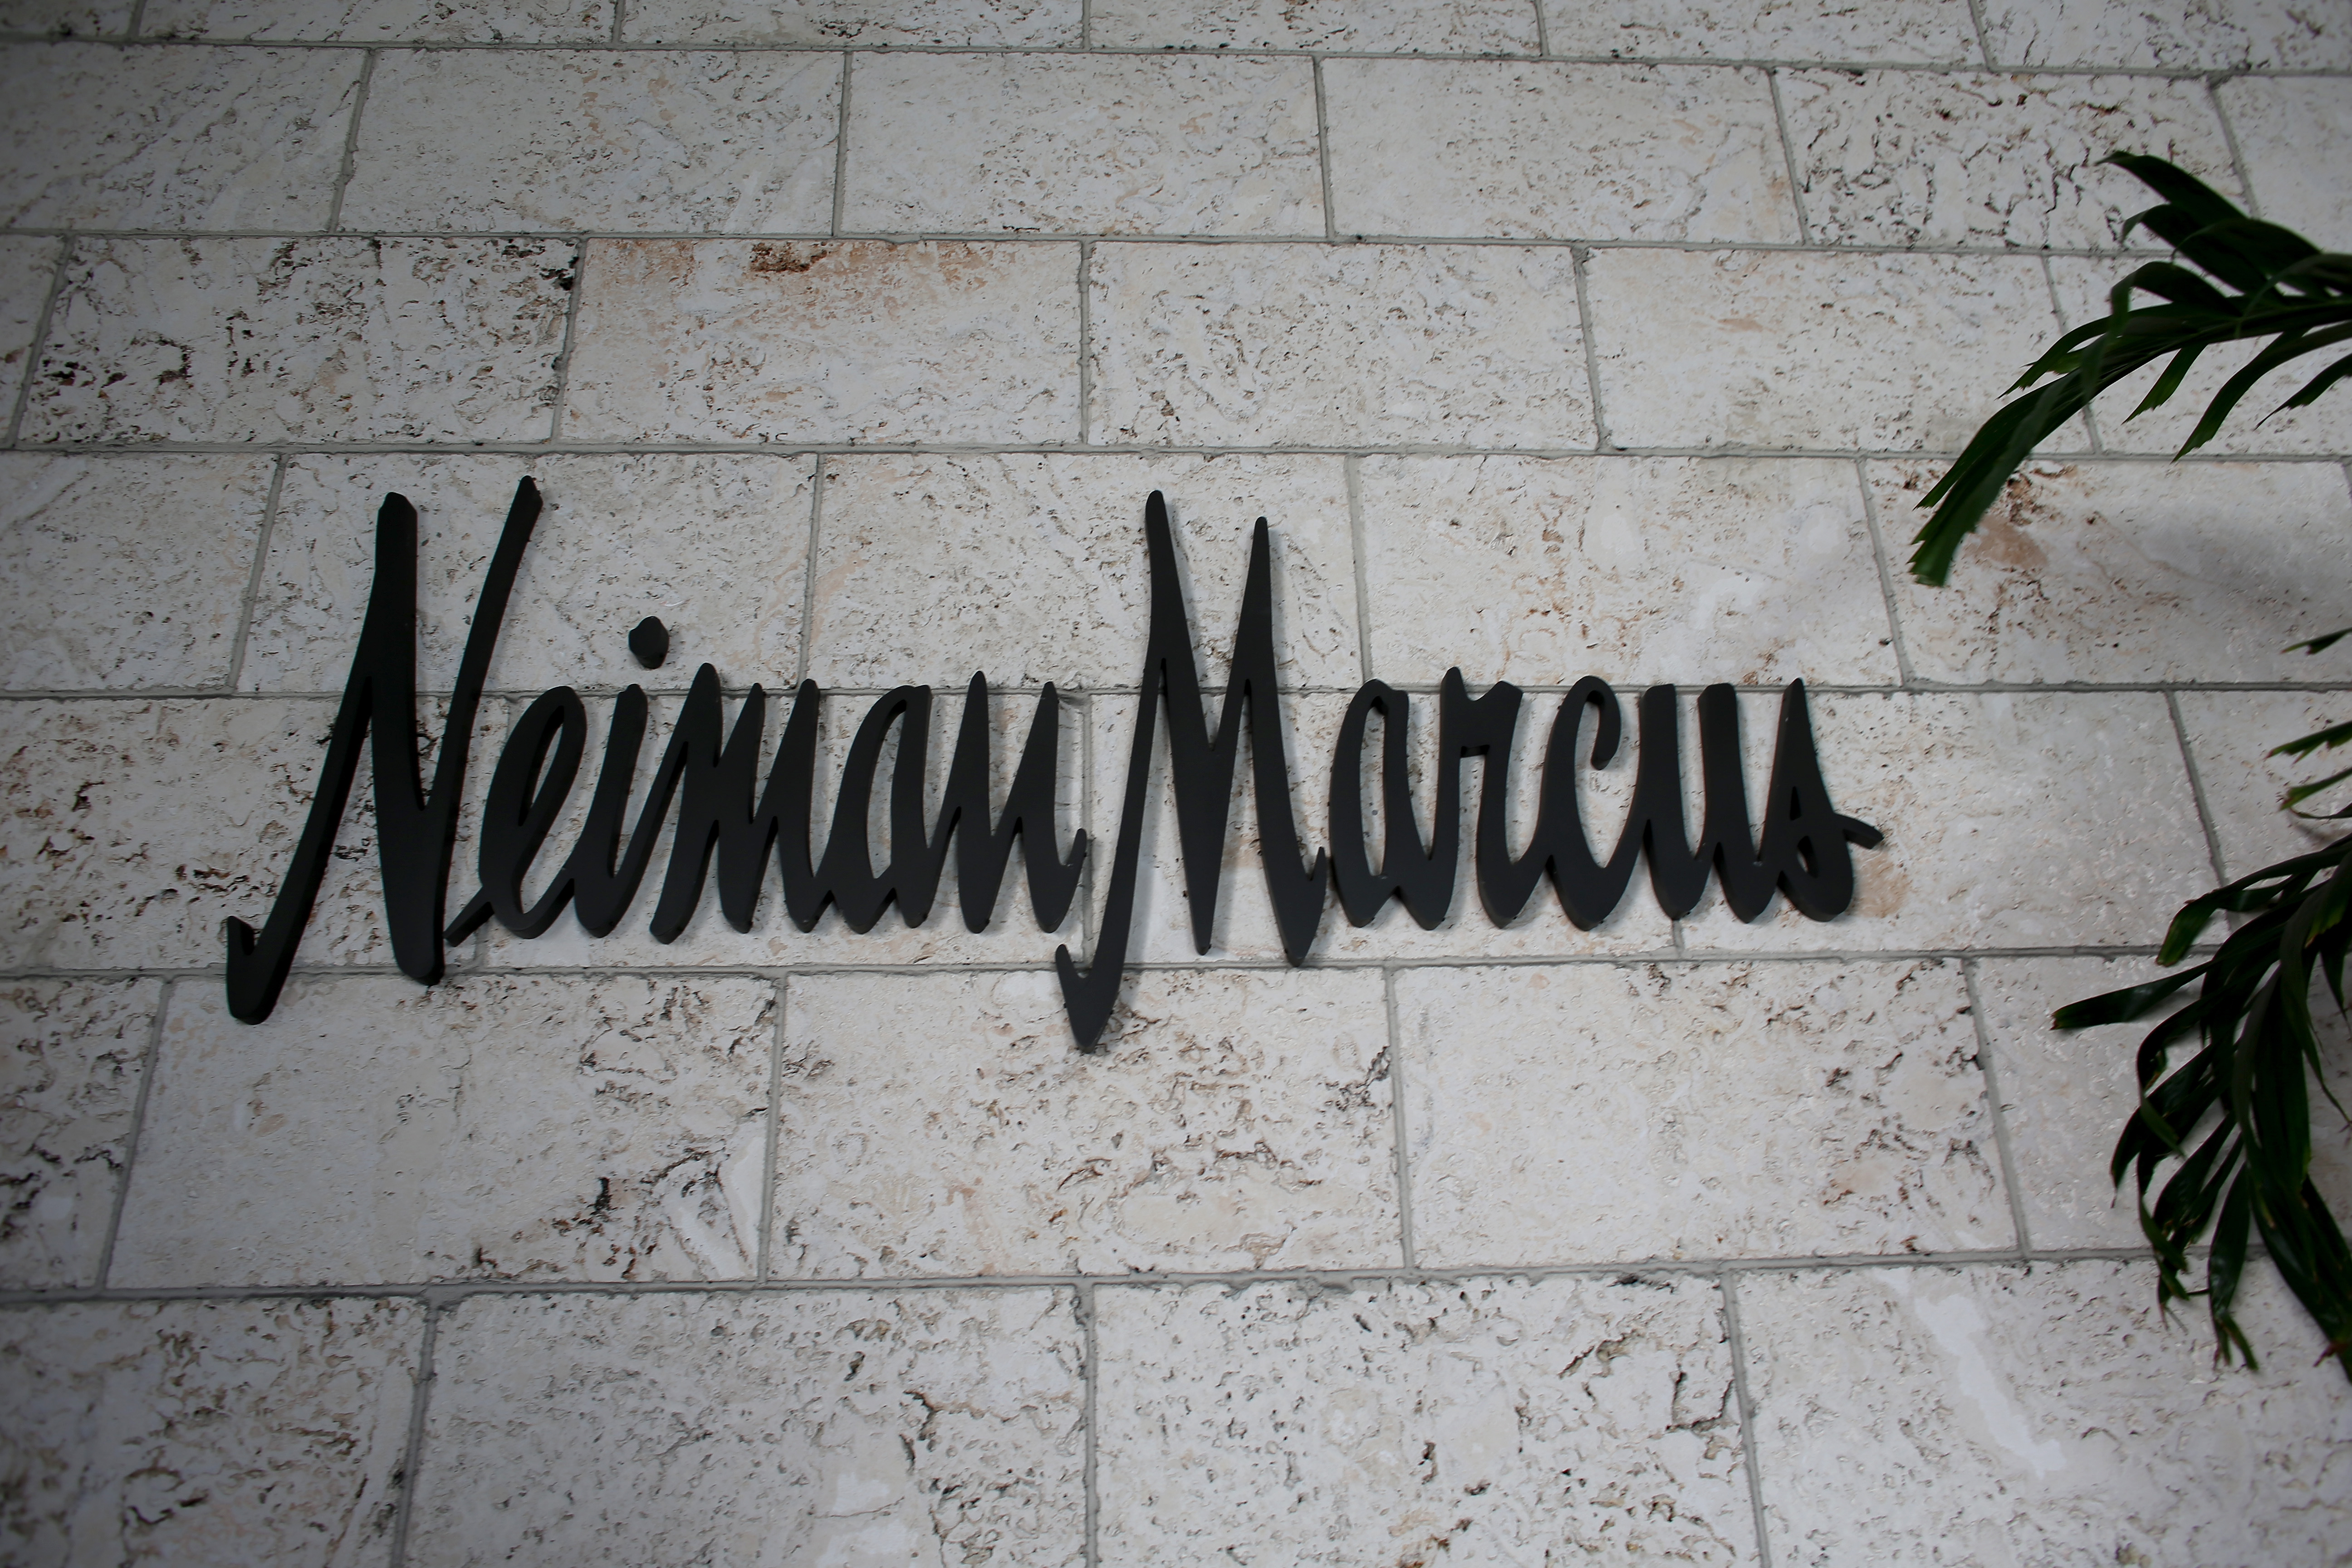 Neiman Marcus Black, HD, logo, png